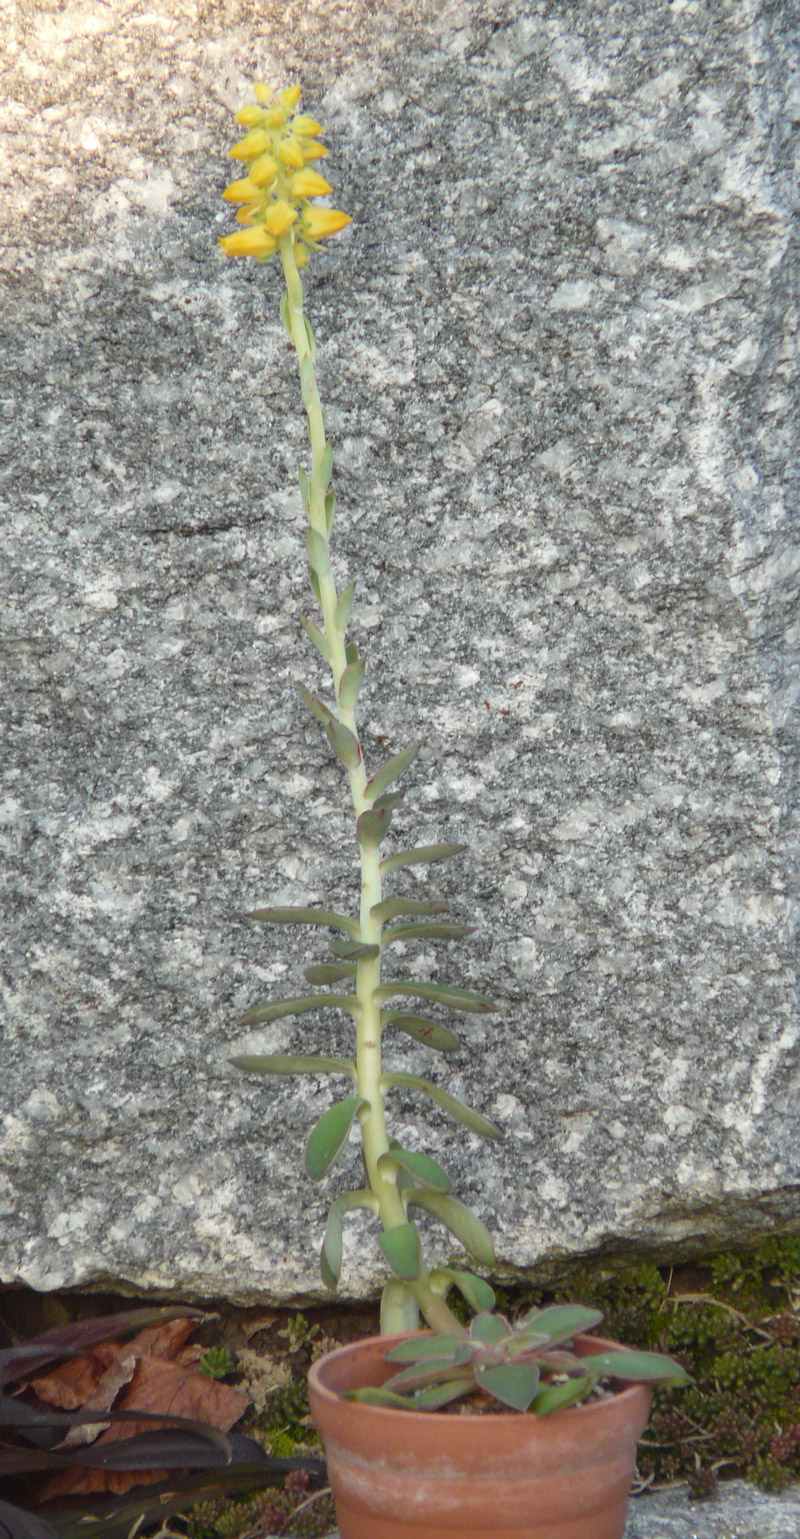 Echeveria racemosa var. citrina